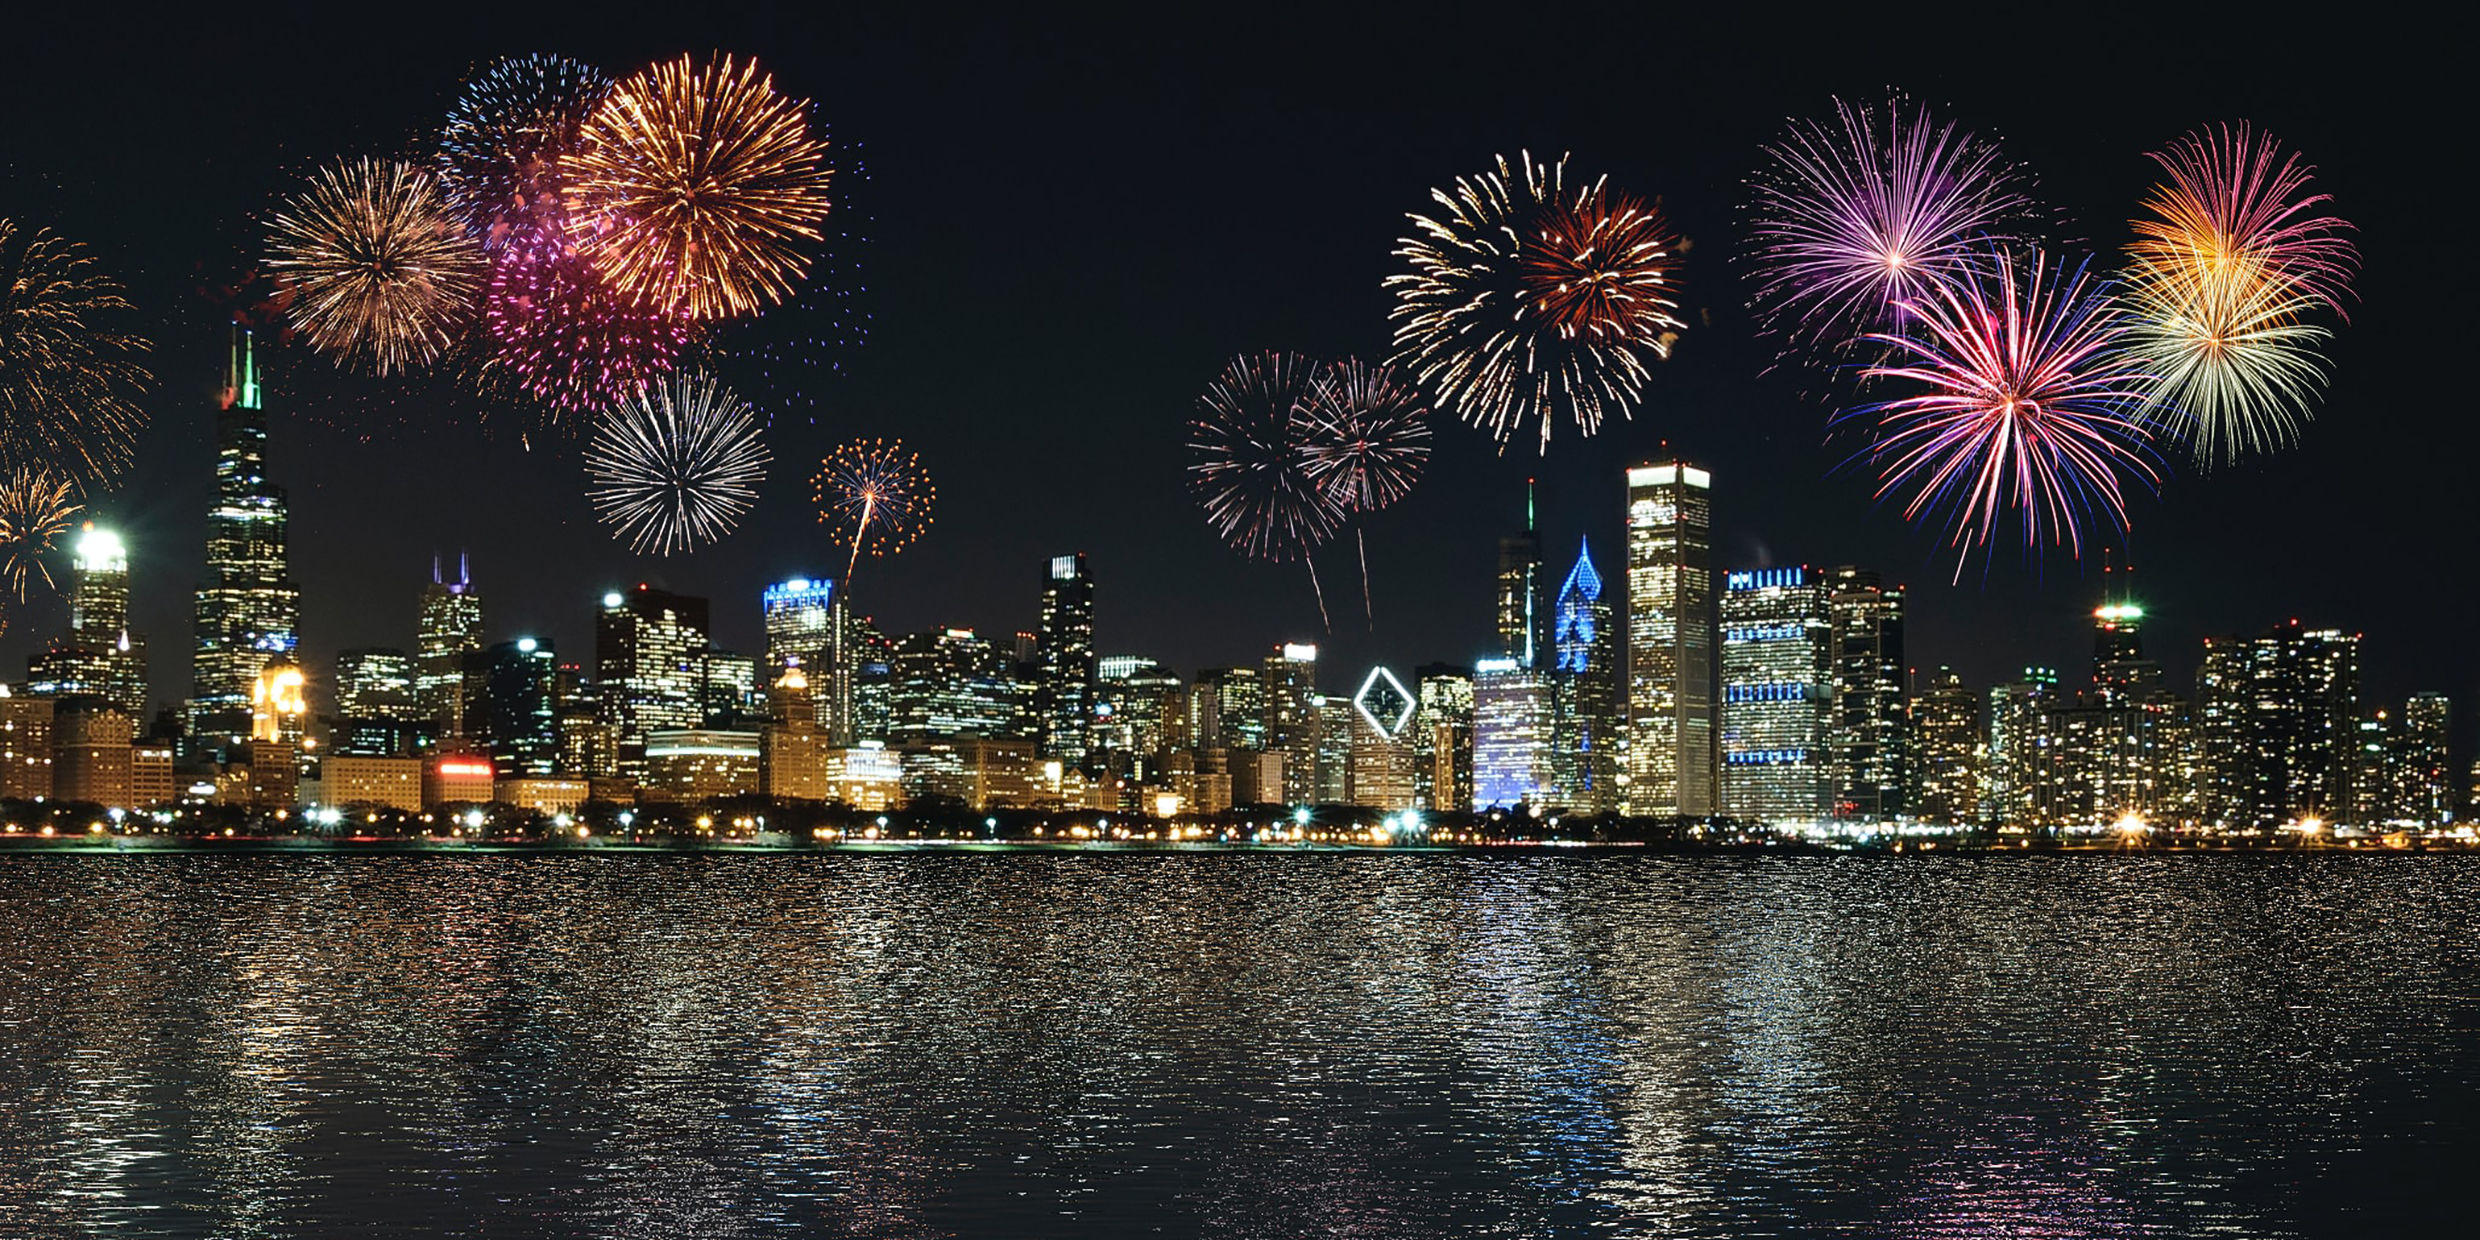 Image of fireworks over city skyline